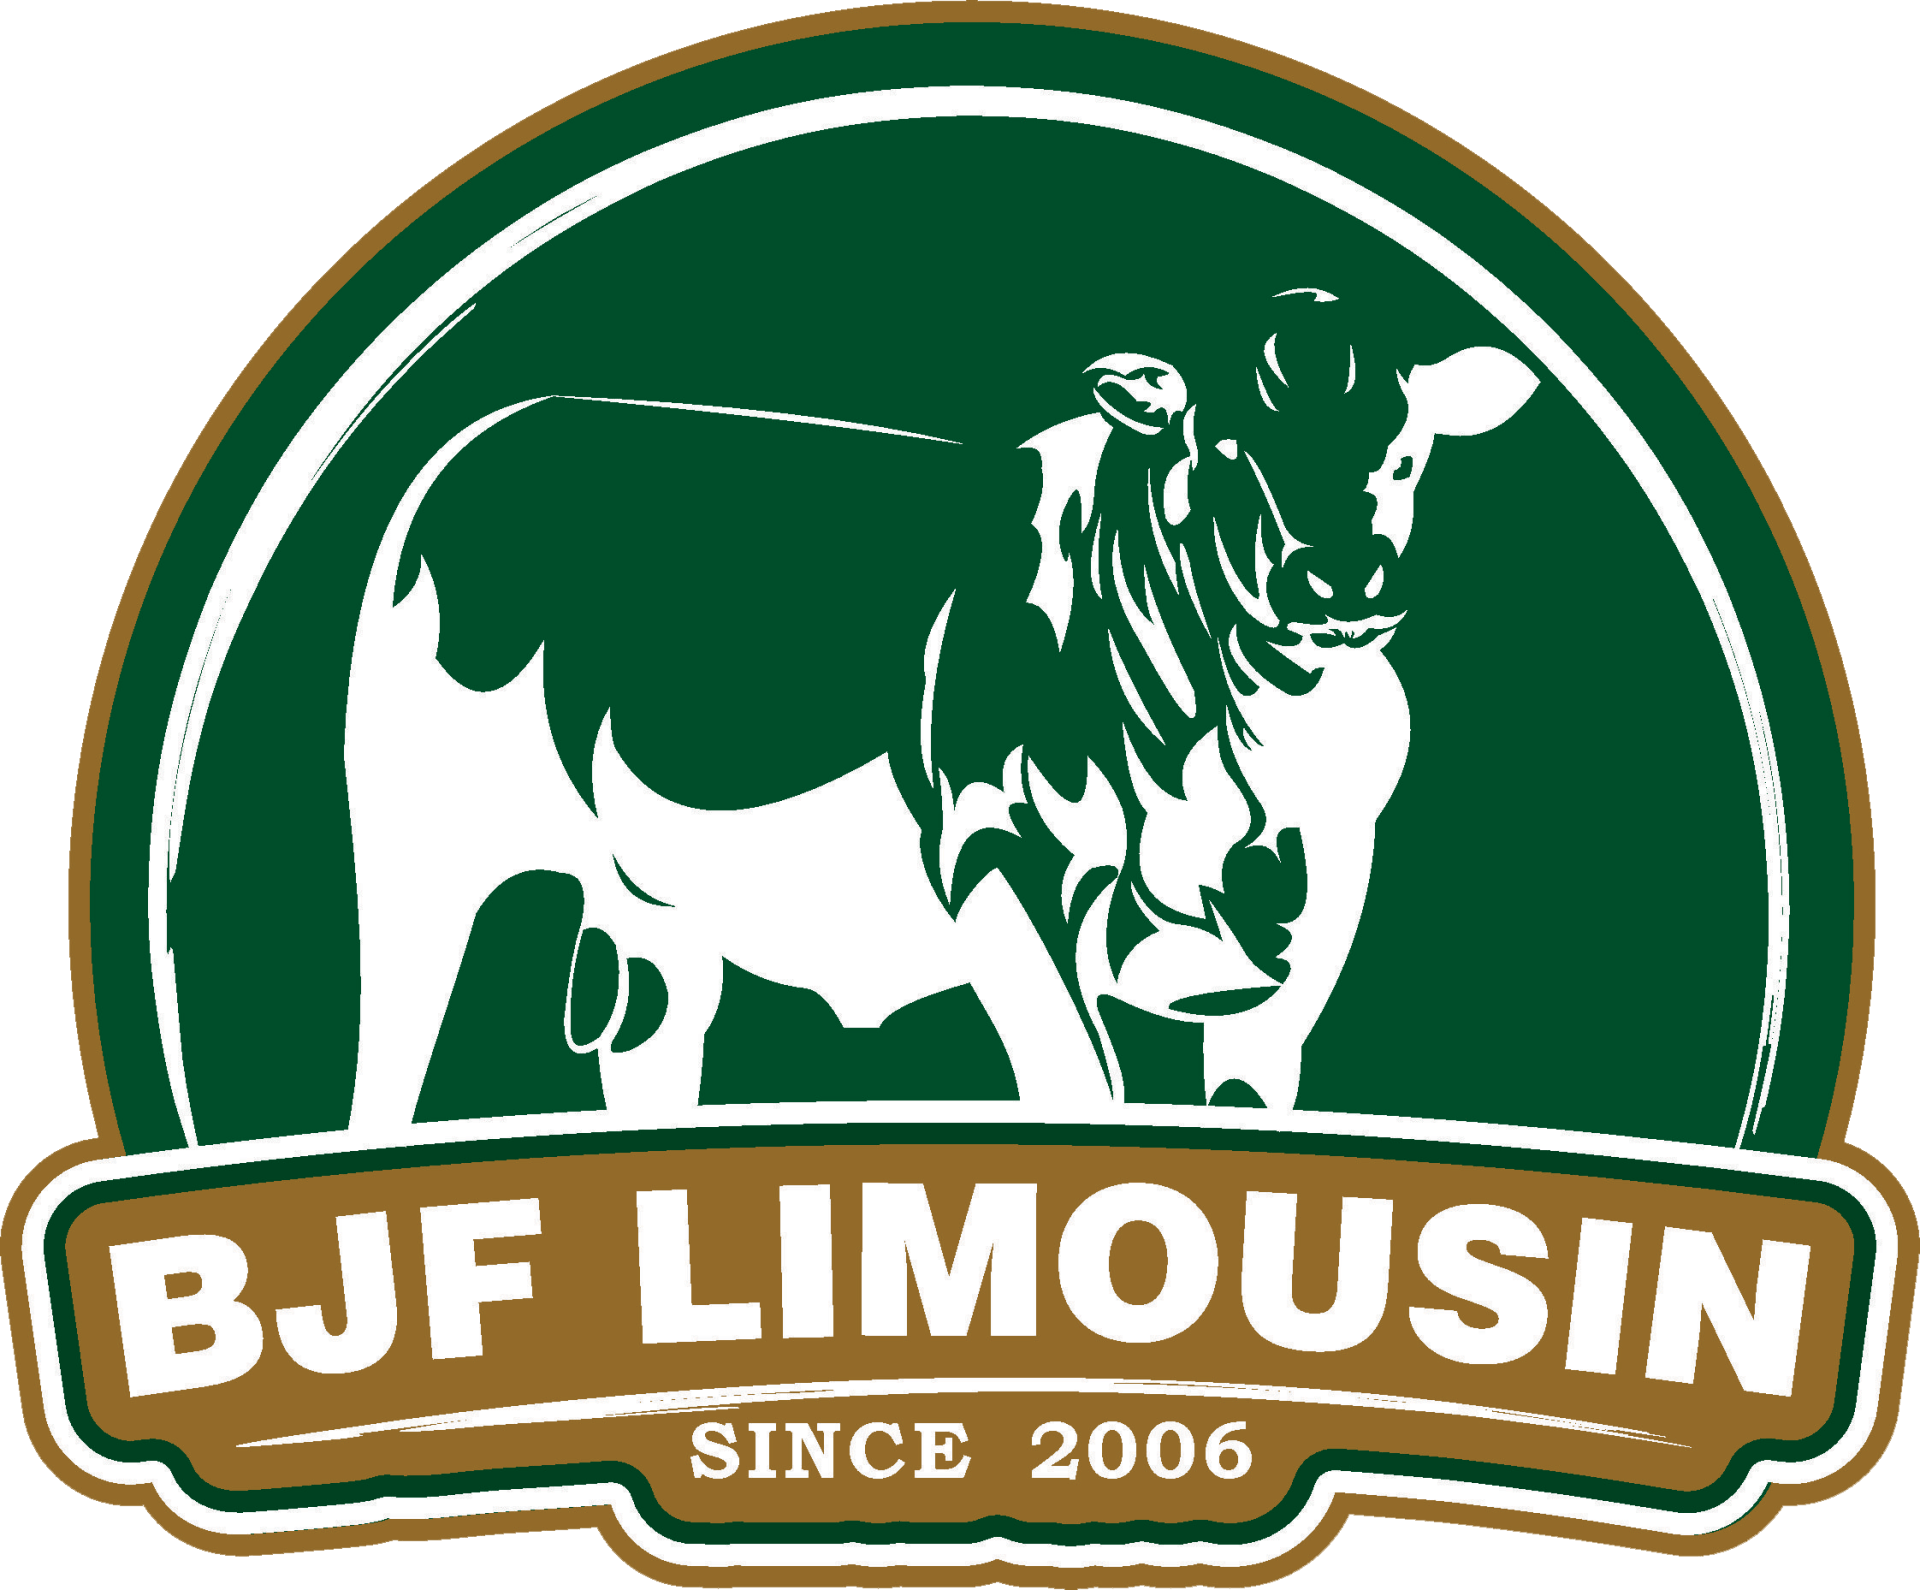 BJF limousin logo